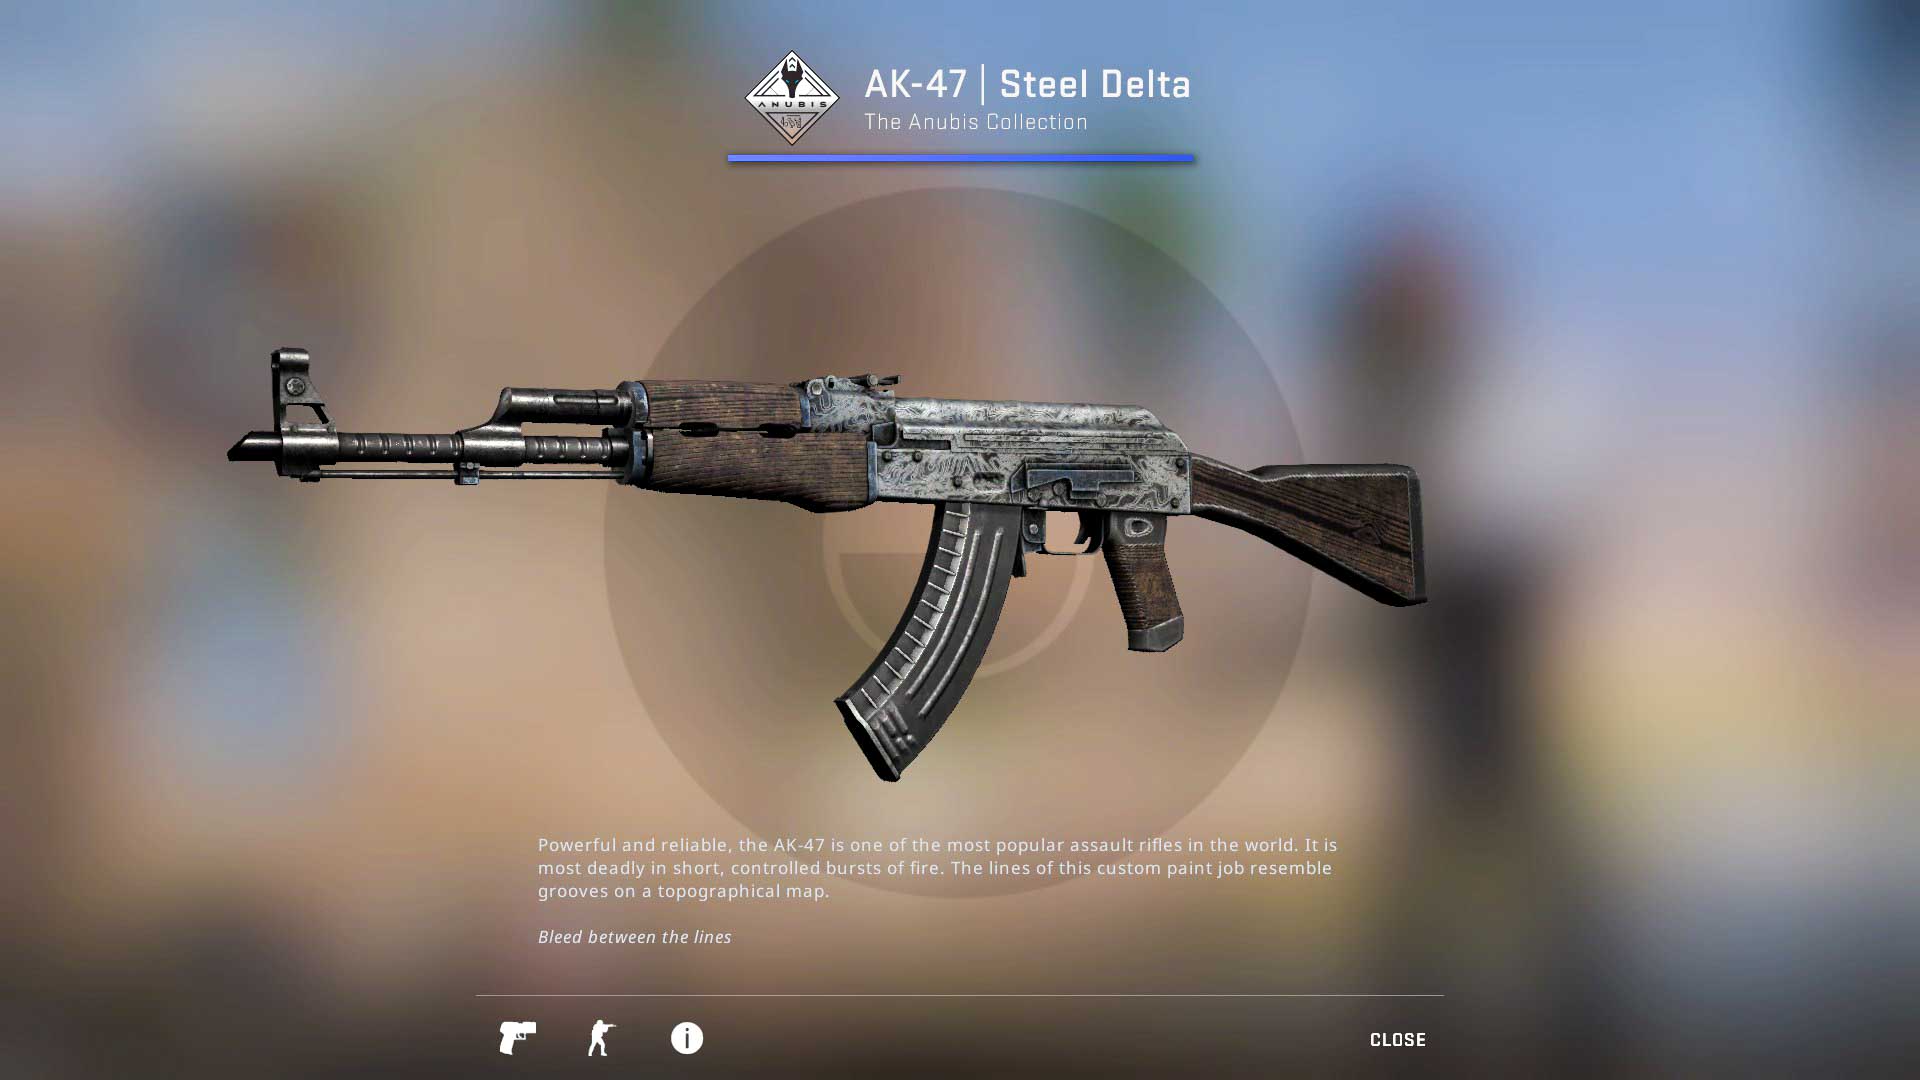 AK-47 Steel Delta csgo skin